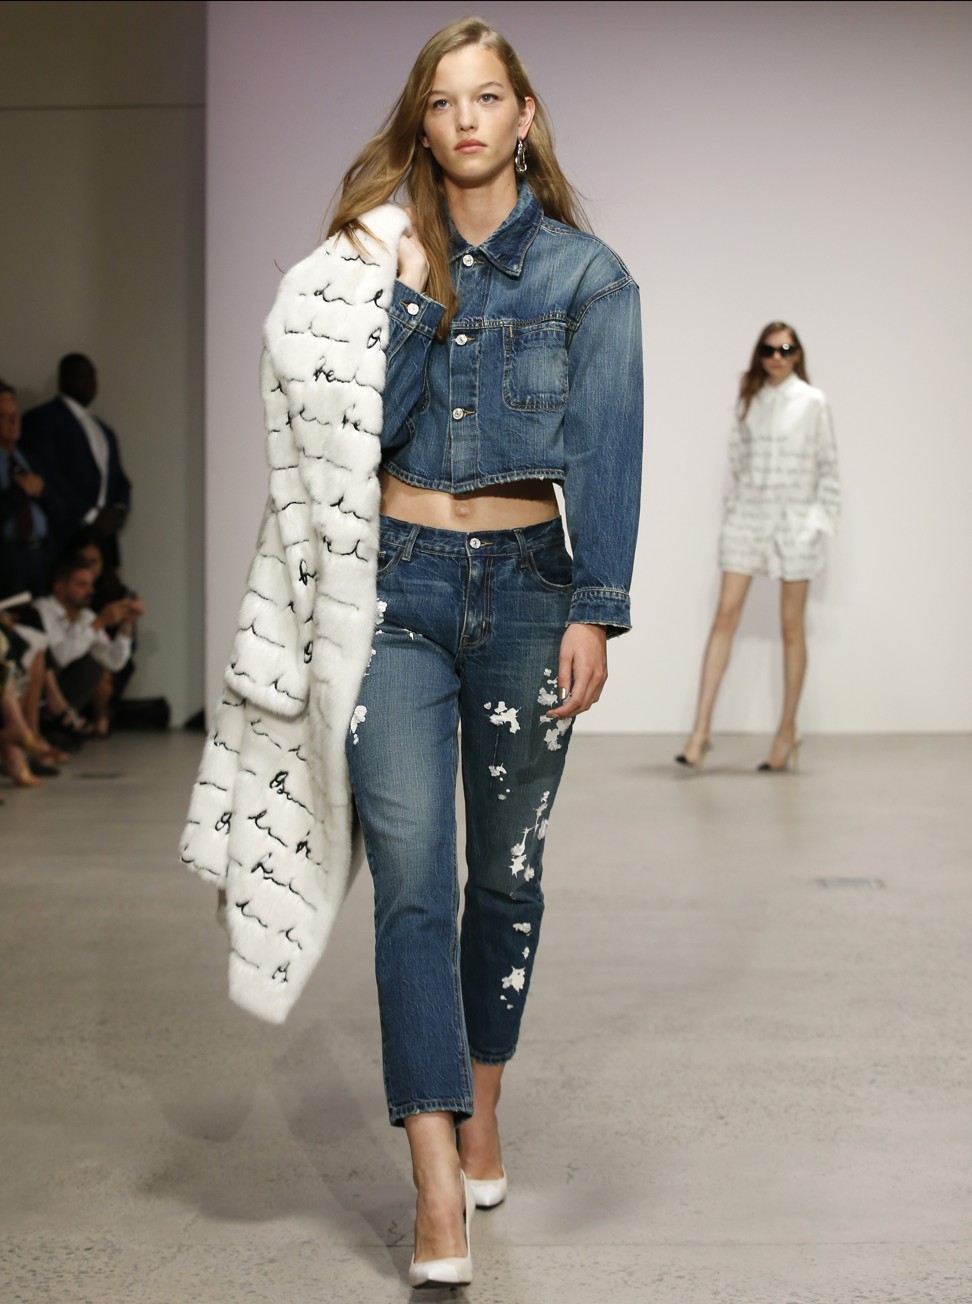 A model walks presents a denim and fur look on the runway at the Oscar de la Renta spring/summer 2018 fashion show during New York Fashion Week. Photo: AP